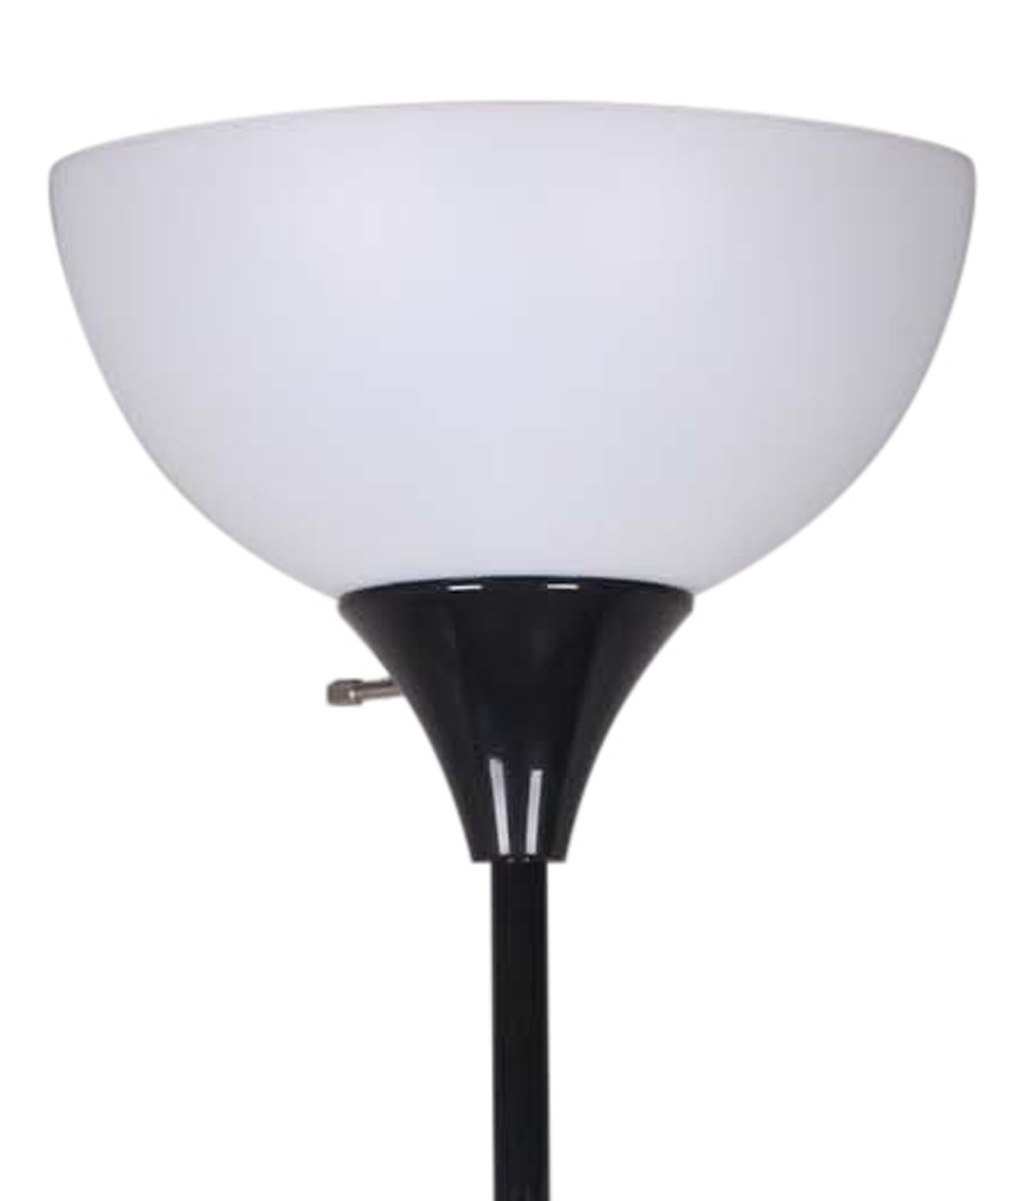 Mainstays 71inch Floor Lamp Black, Mainstays Floor Lamp Shade Replacement